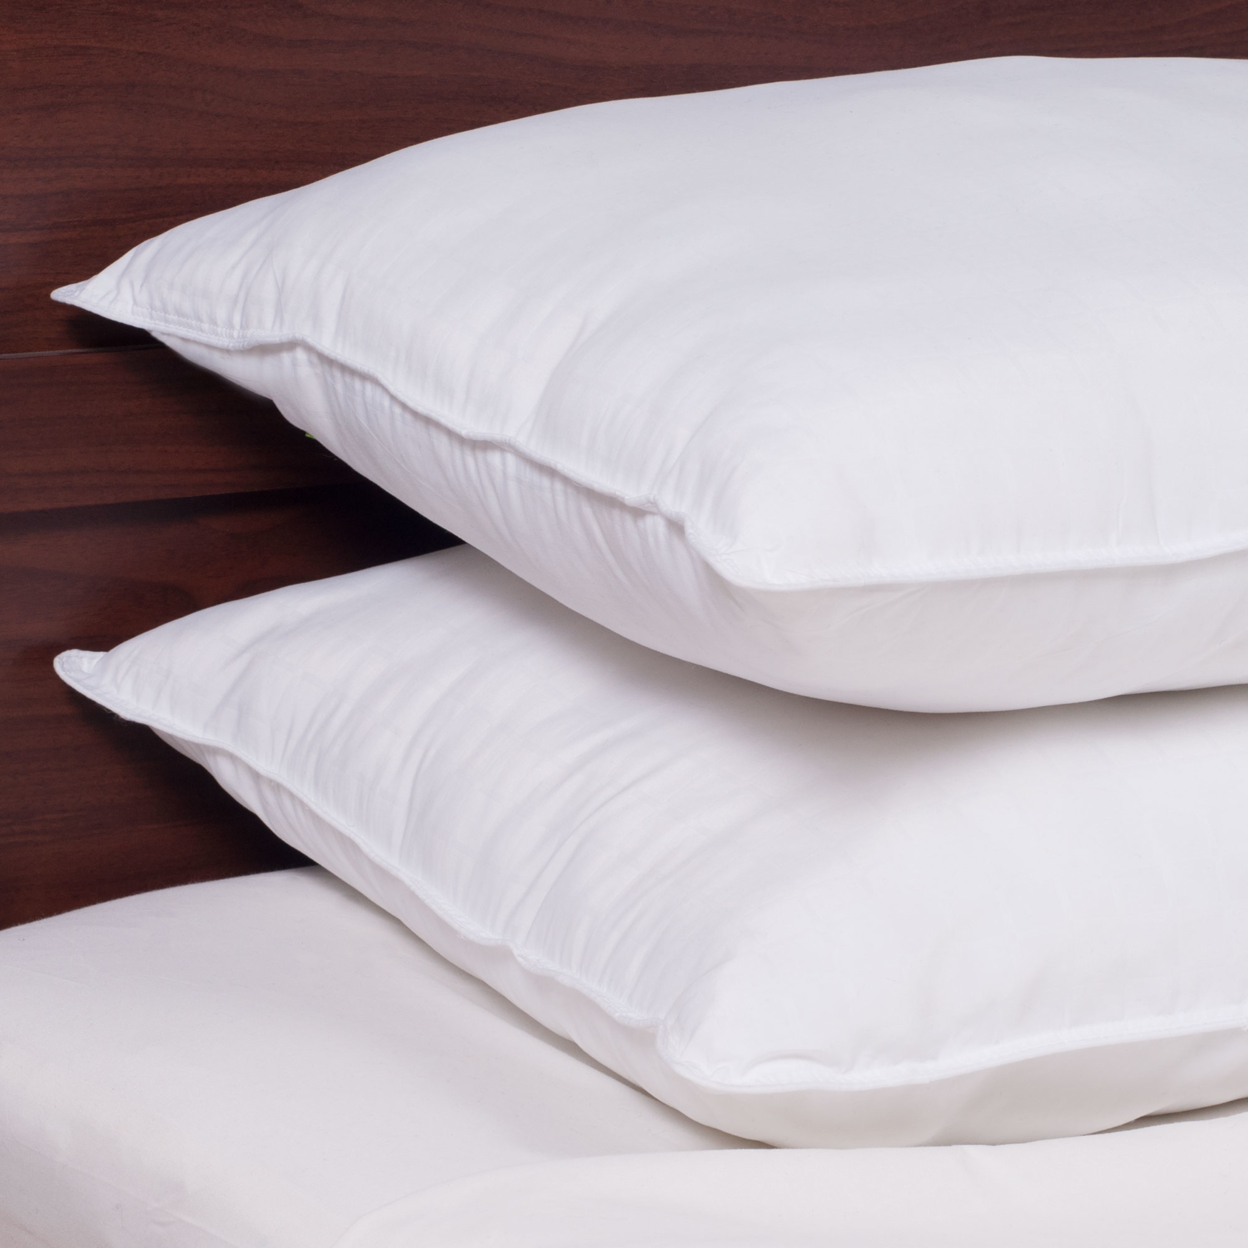 Lavish Home Ultra-Soft Down Alternative Pillow - Standard Size